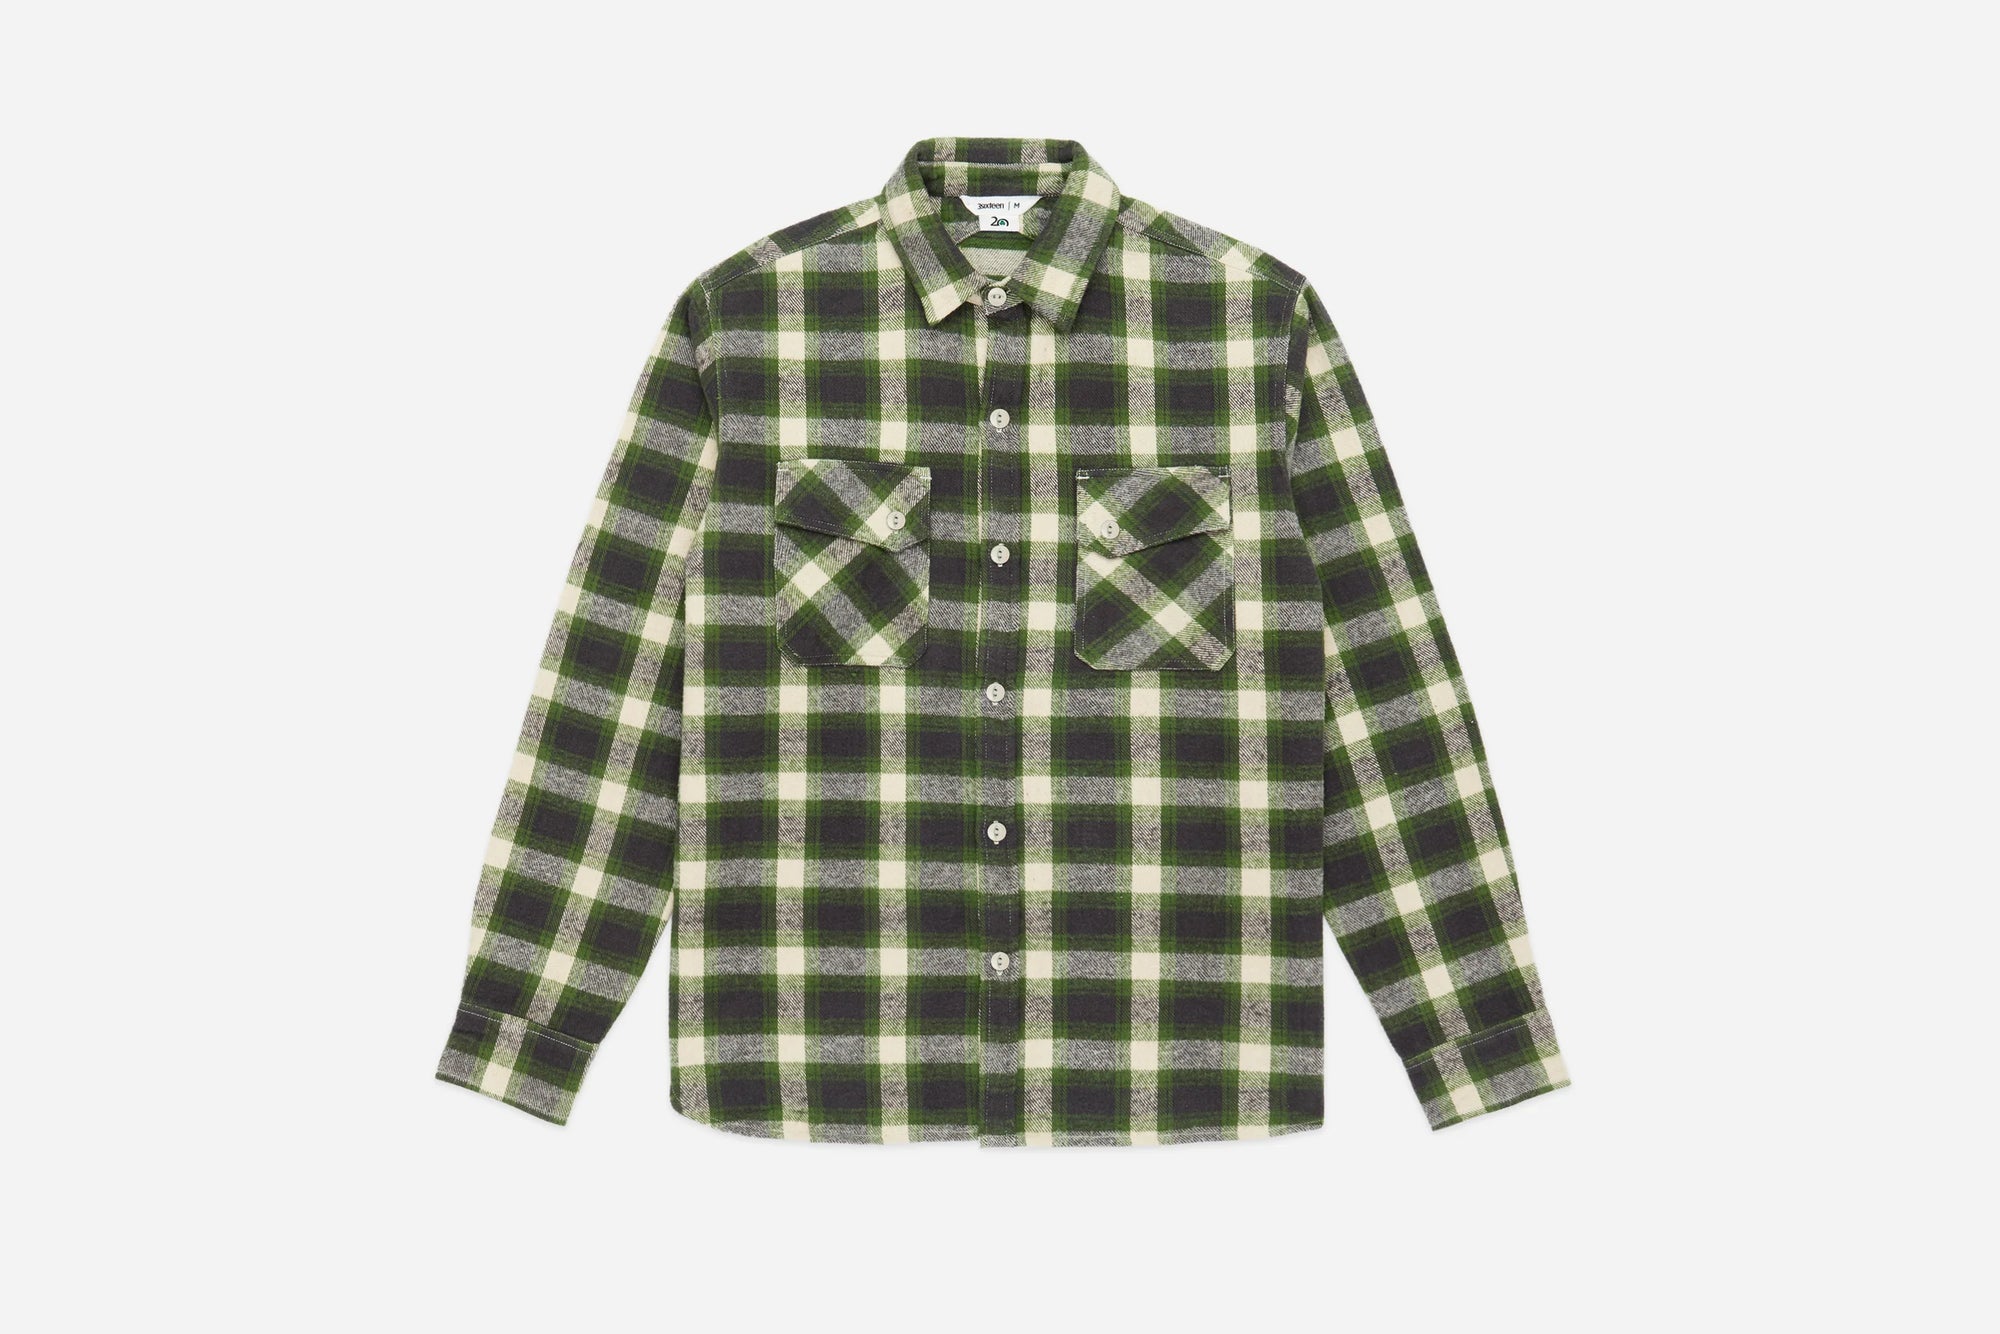 3Sixteen Crosscut Flannel in Emerald Shaggy Check